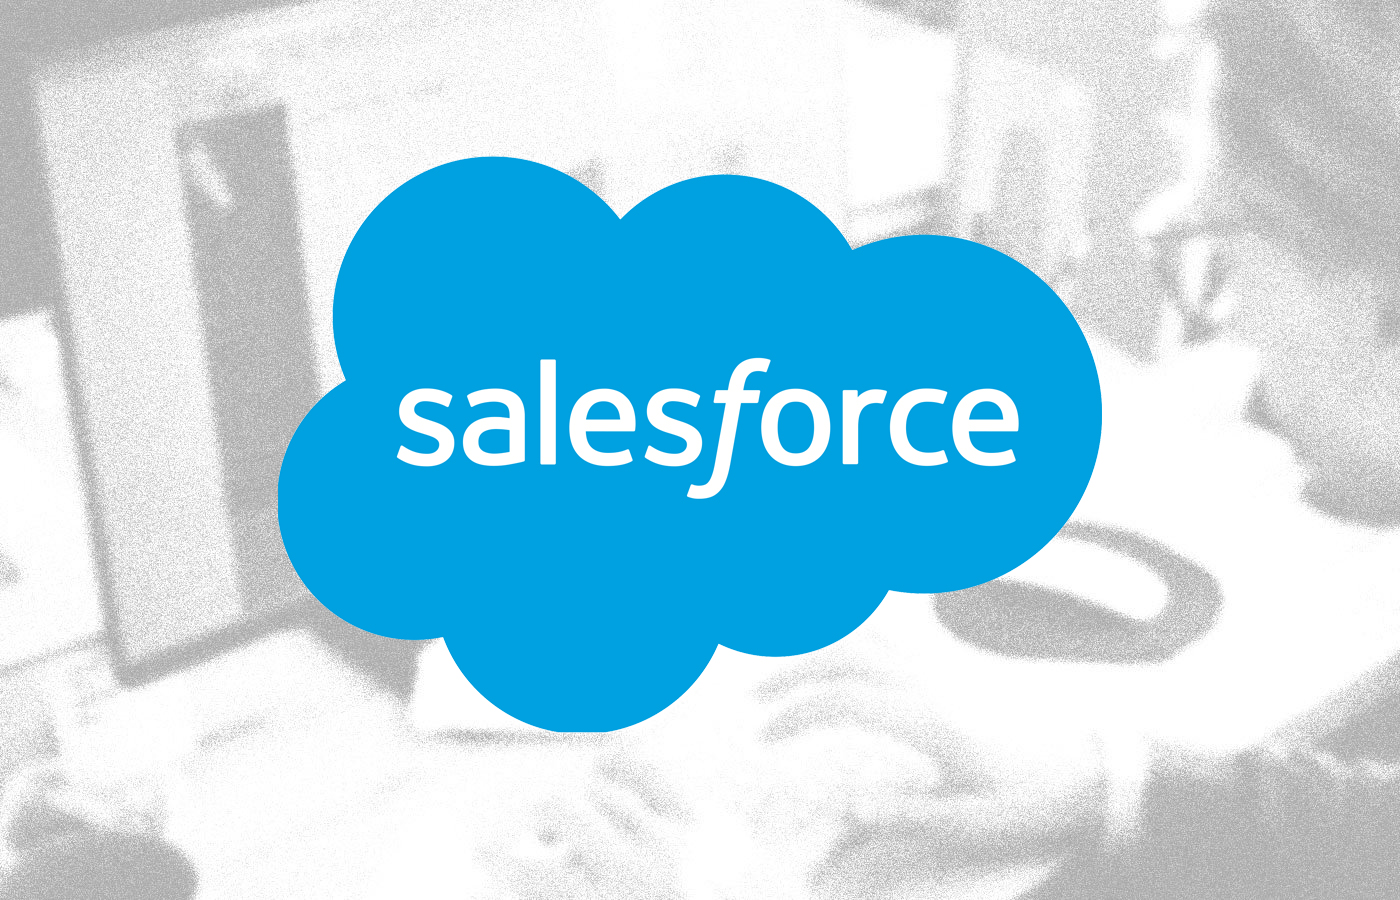 Salesforce logo on grainy background